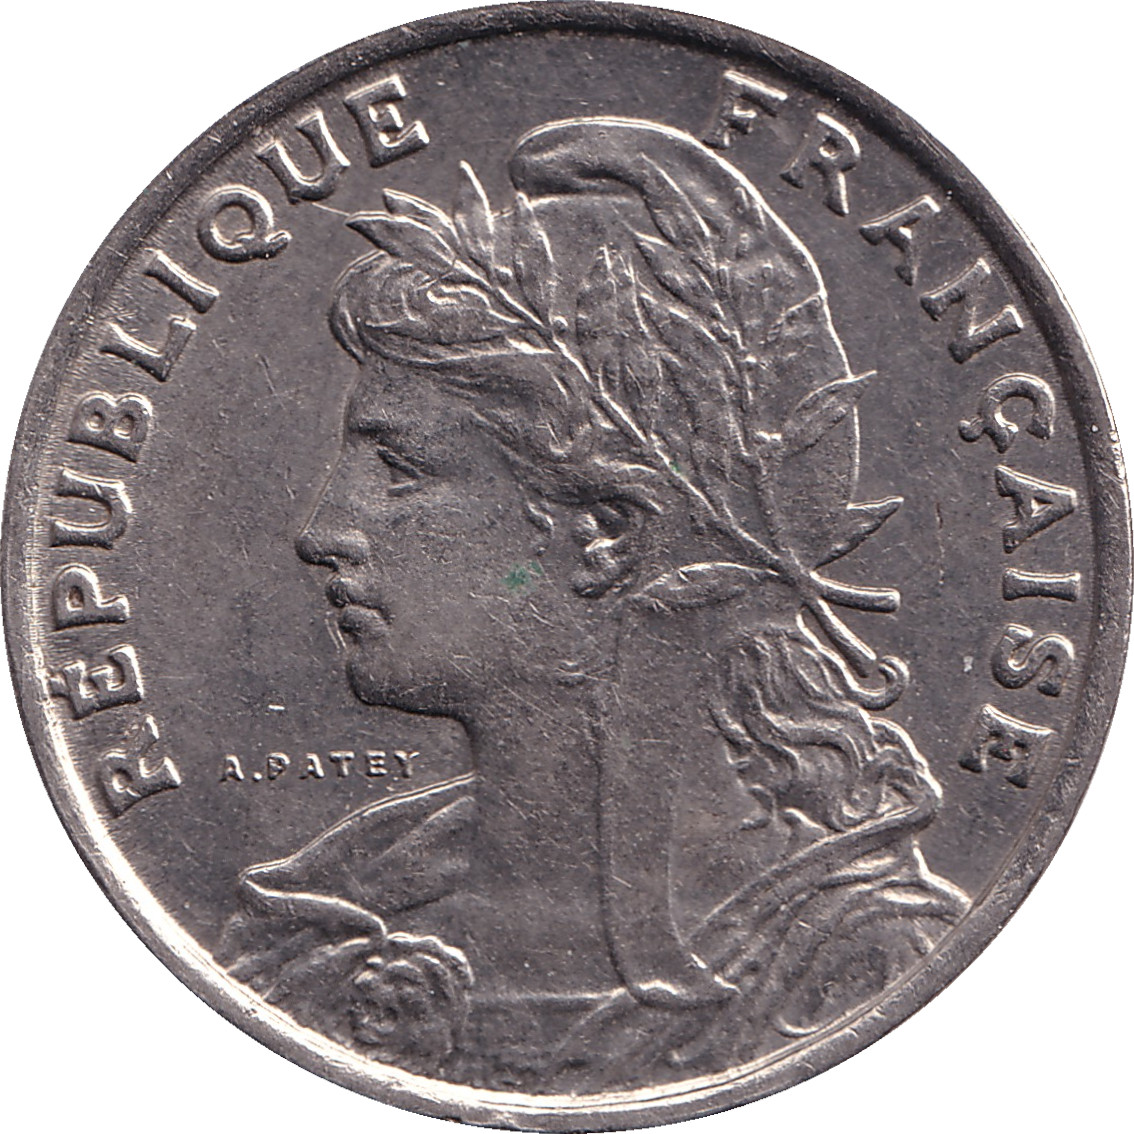 25 centimes - Patey - Cadre